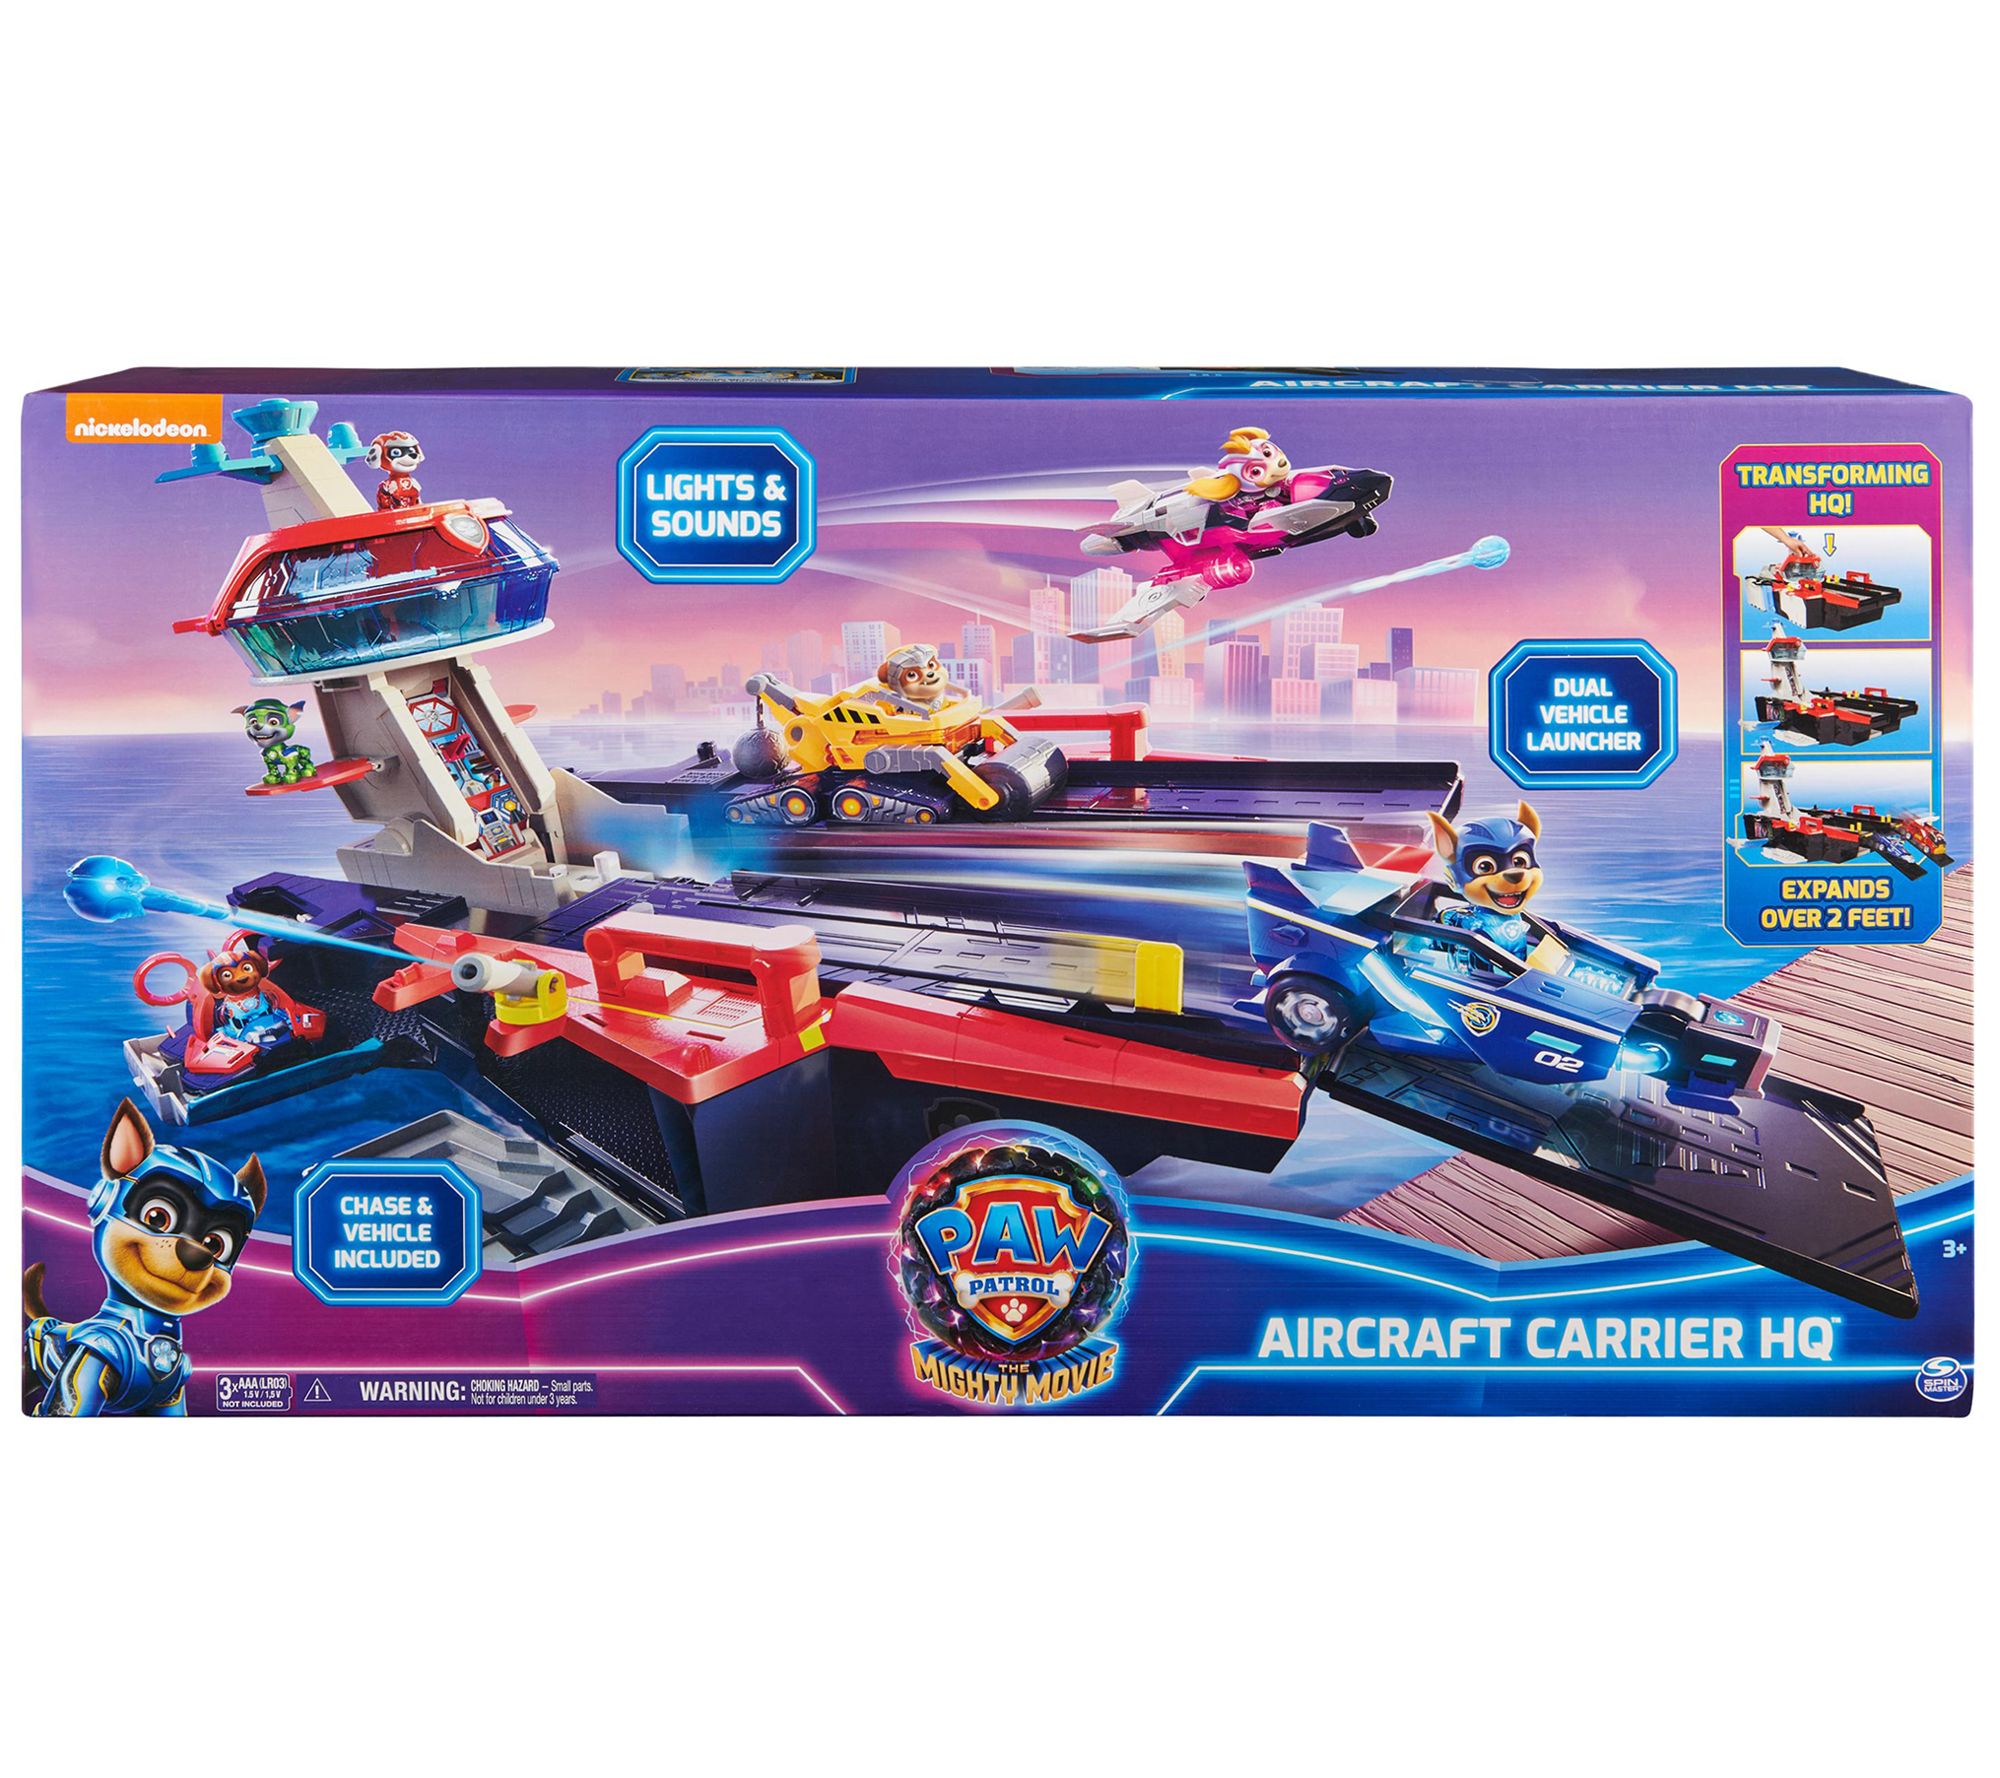 Paw Patrol Marine Hq Toy Vehicle Playset : Target